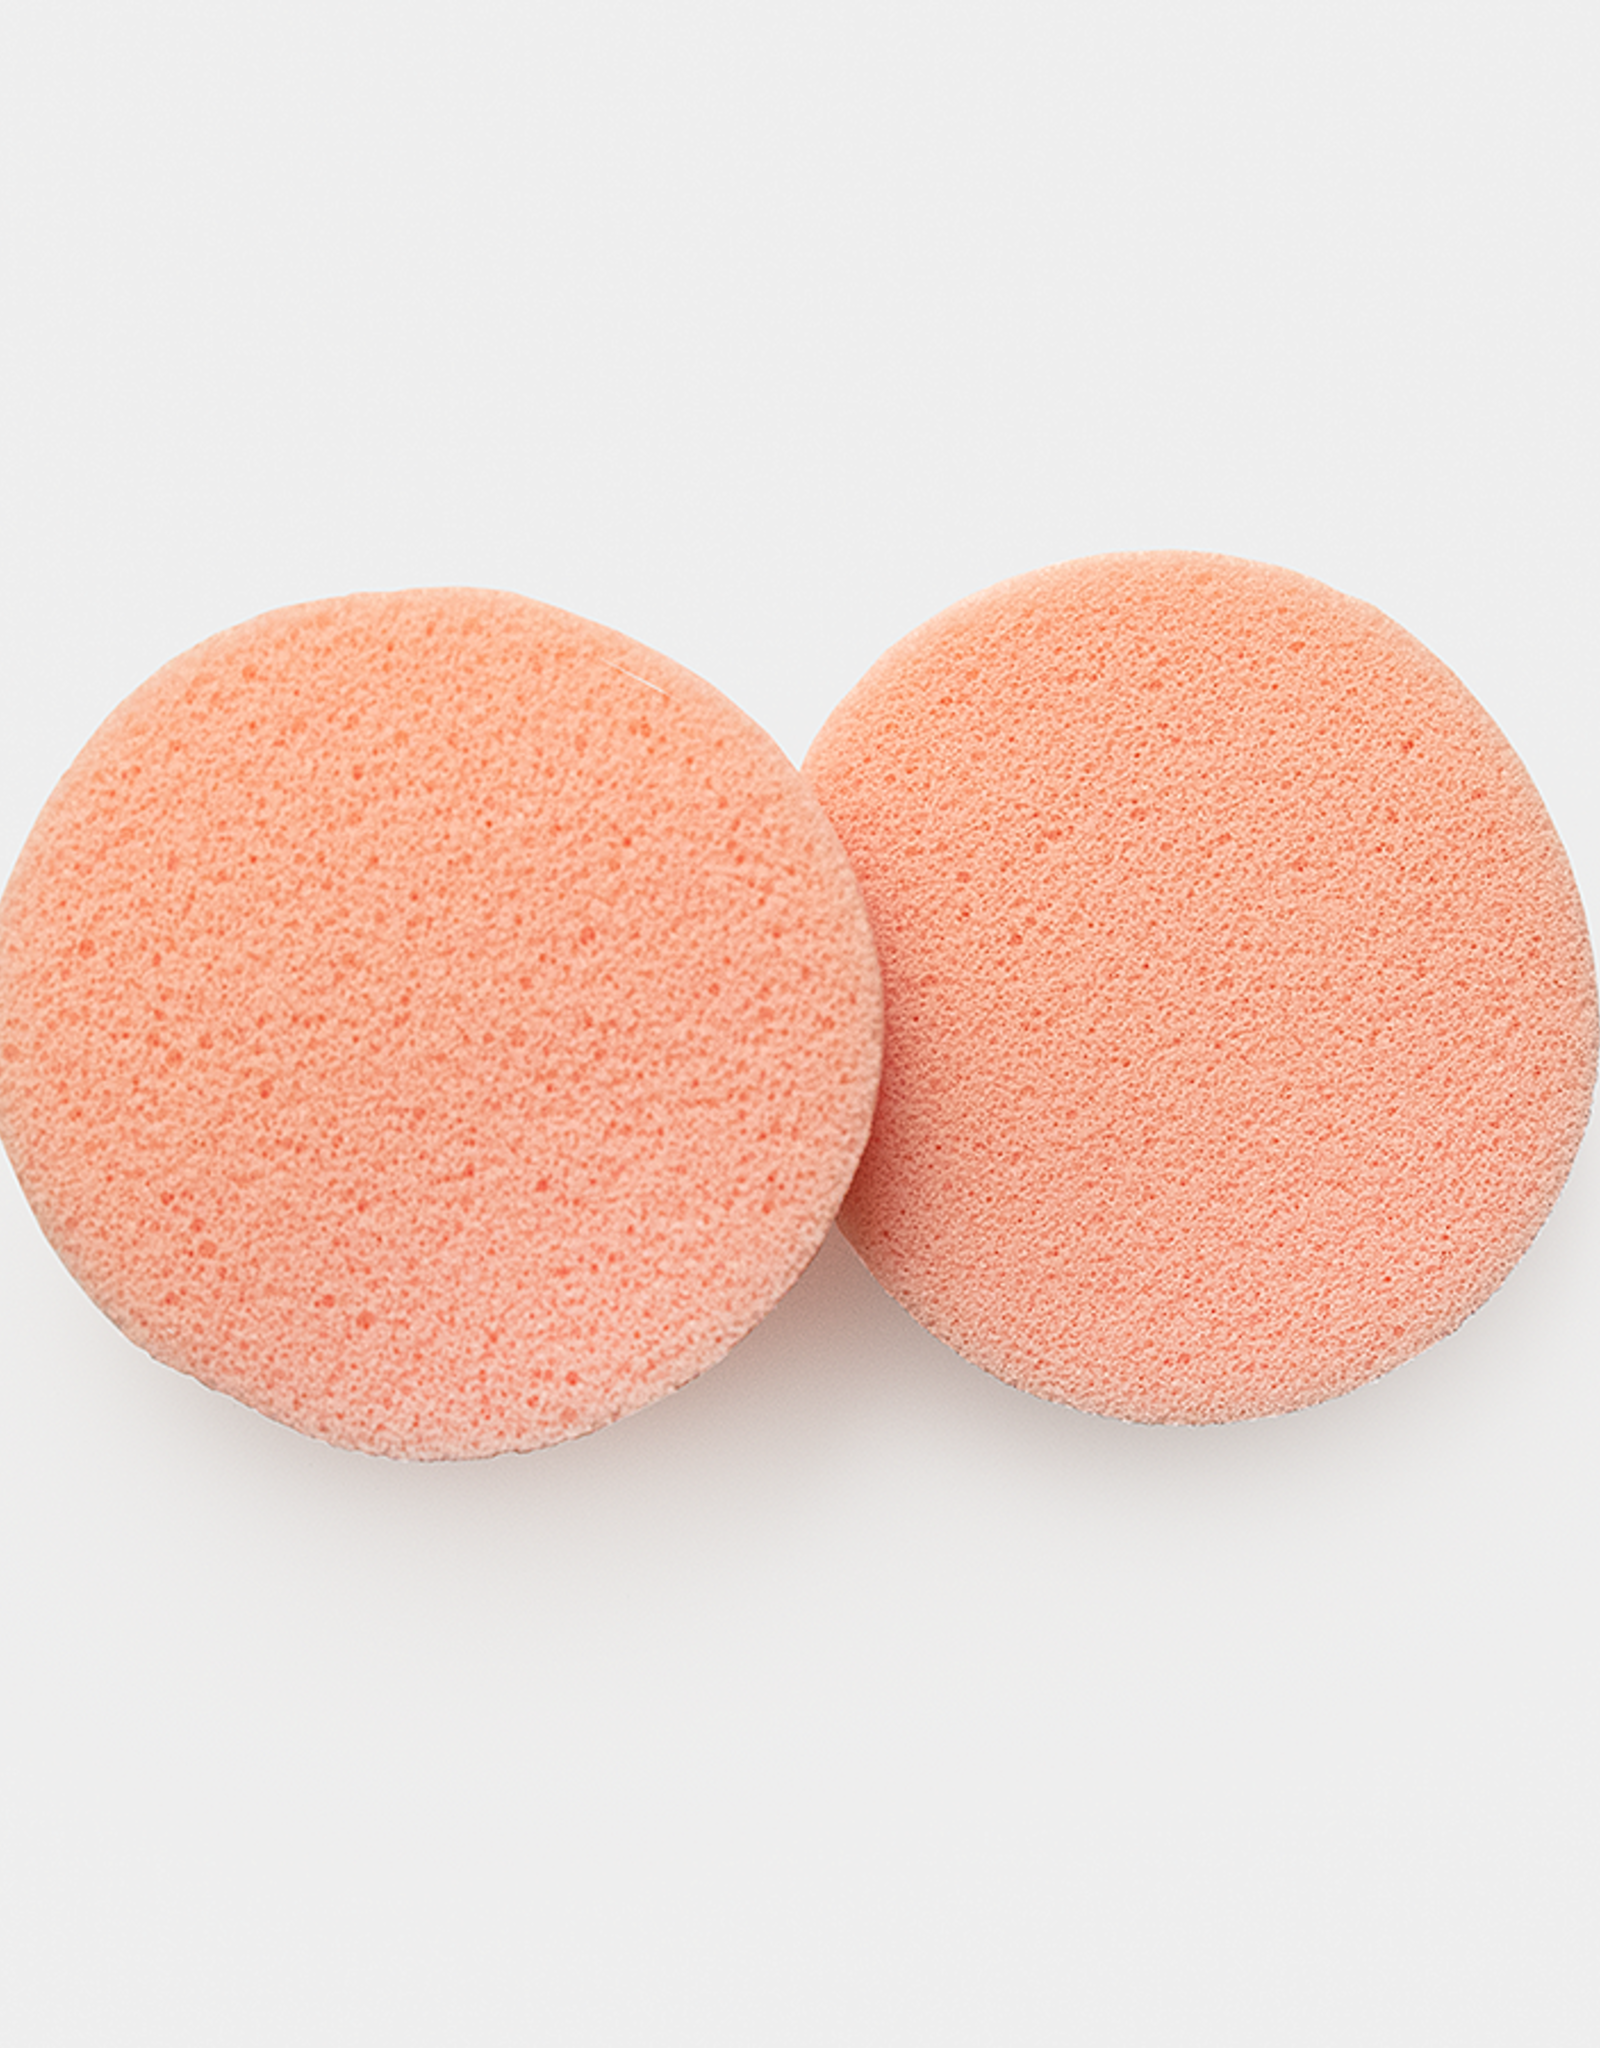 Garment Deodorant Remover Sponges | Two Pack